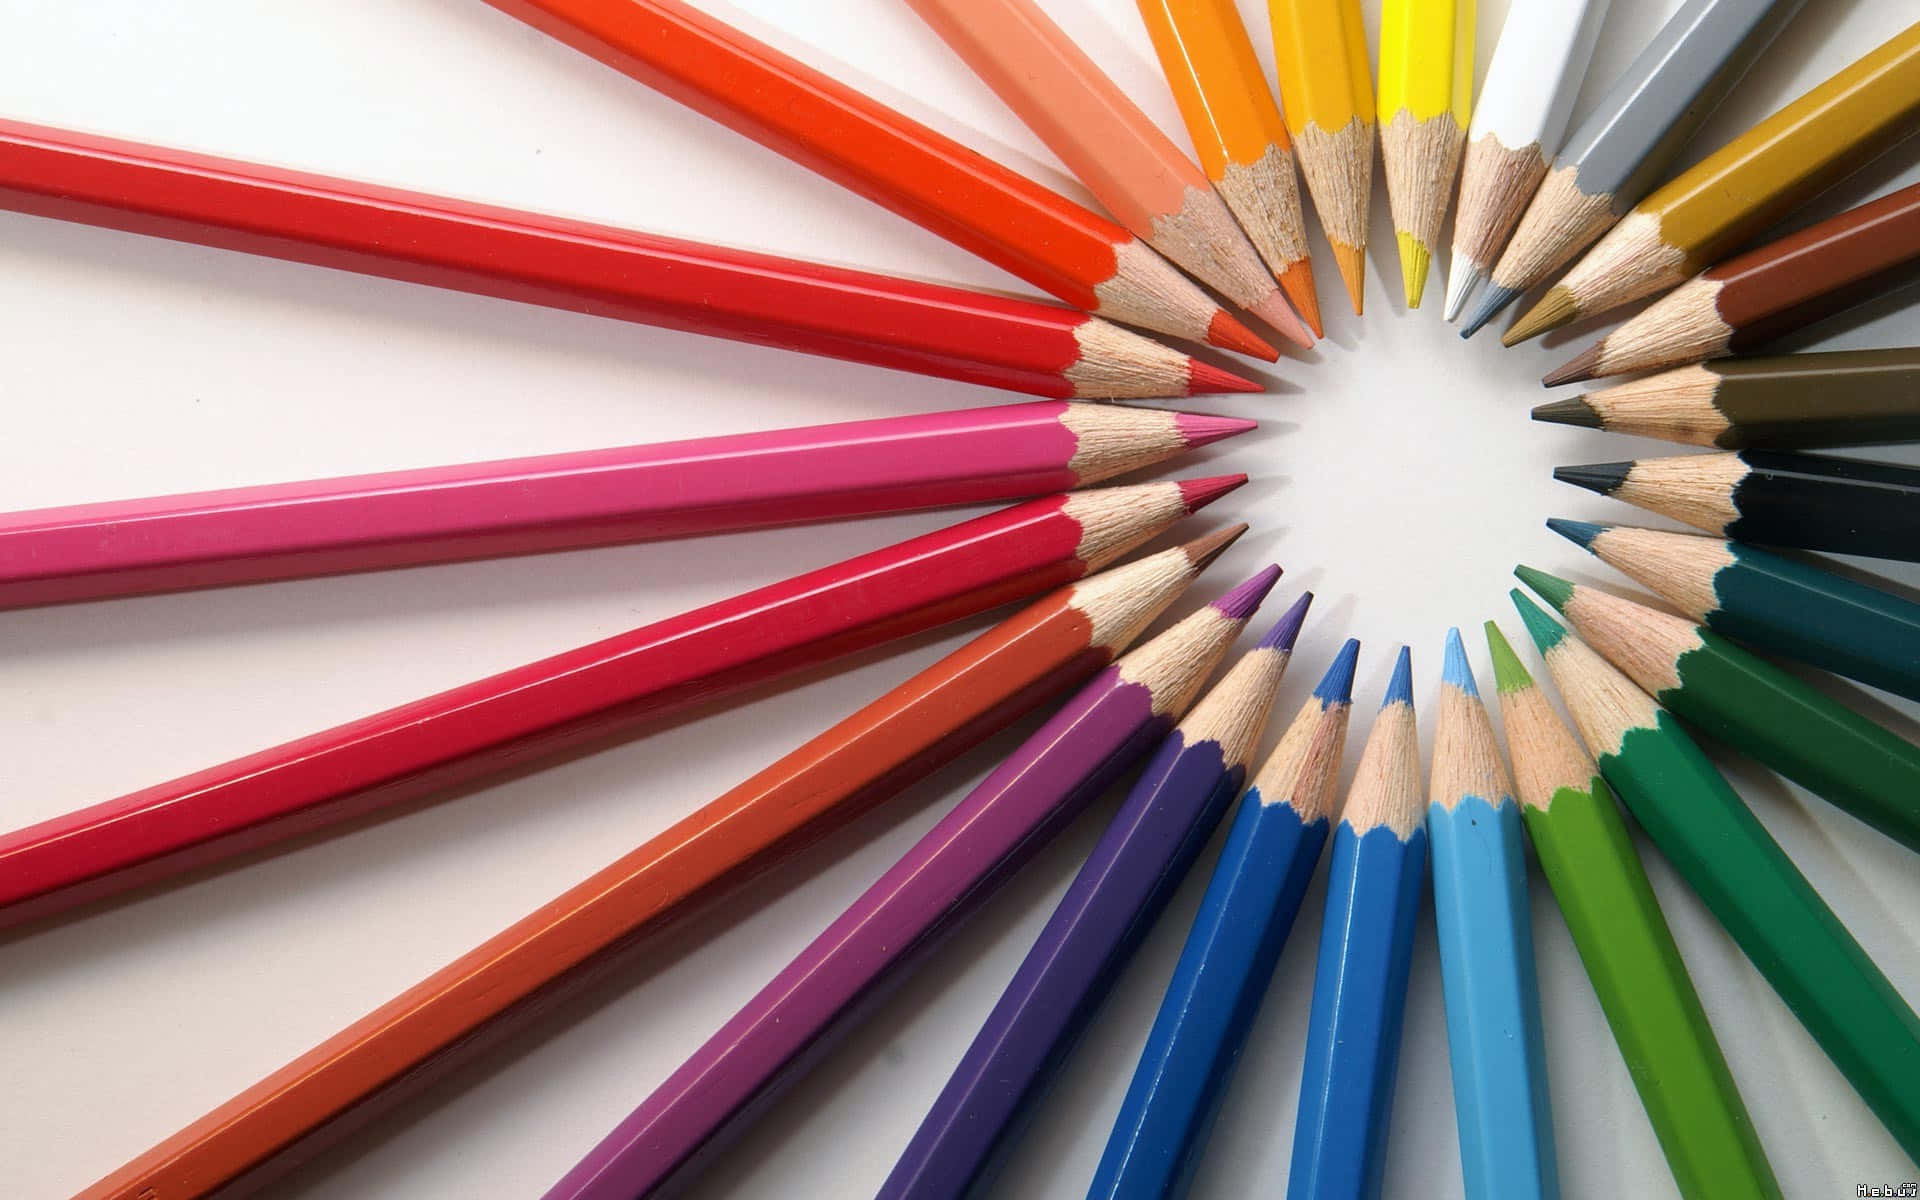 An artistic representation of pencil